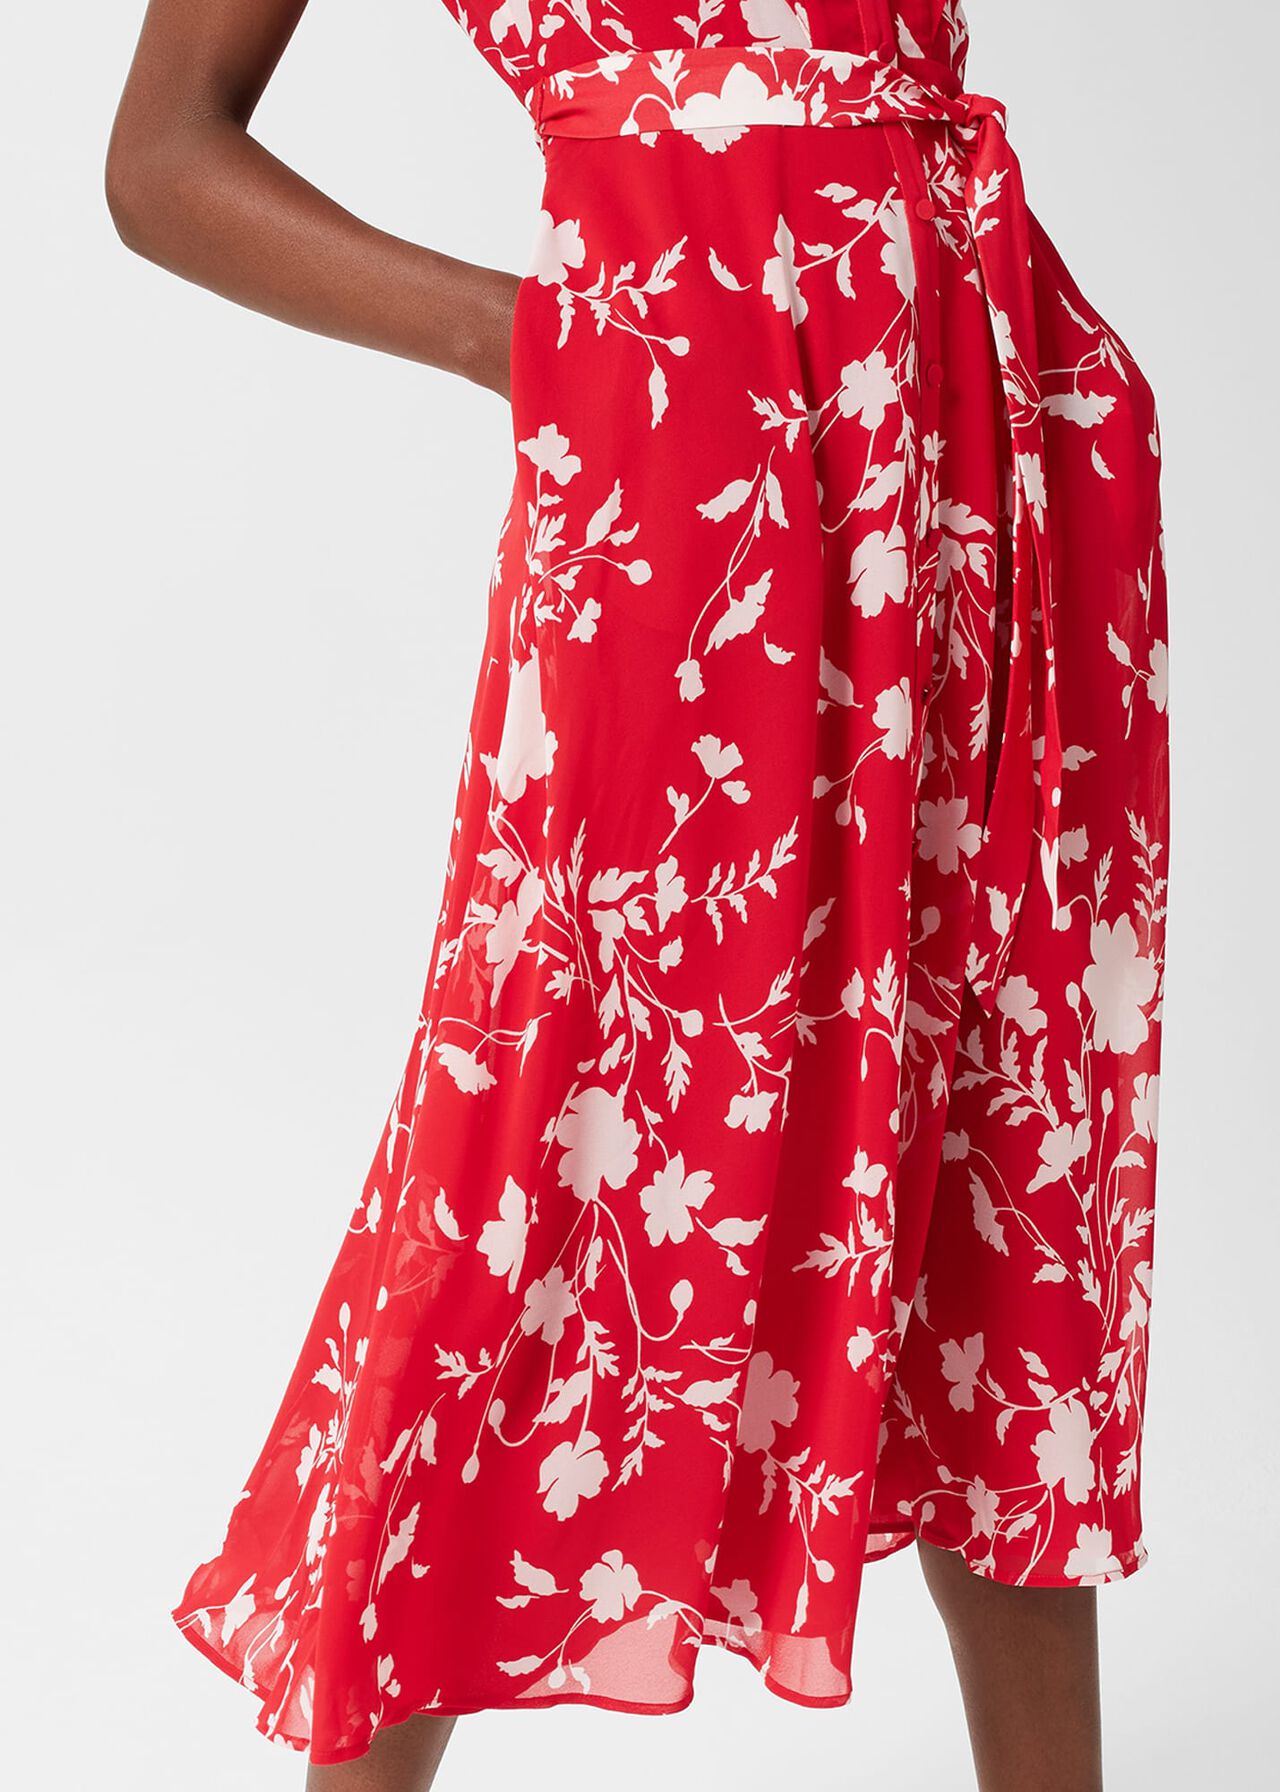 Georgiana Floral Dress, Red Ivory, hi-res